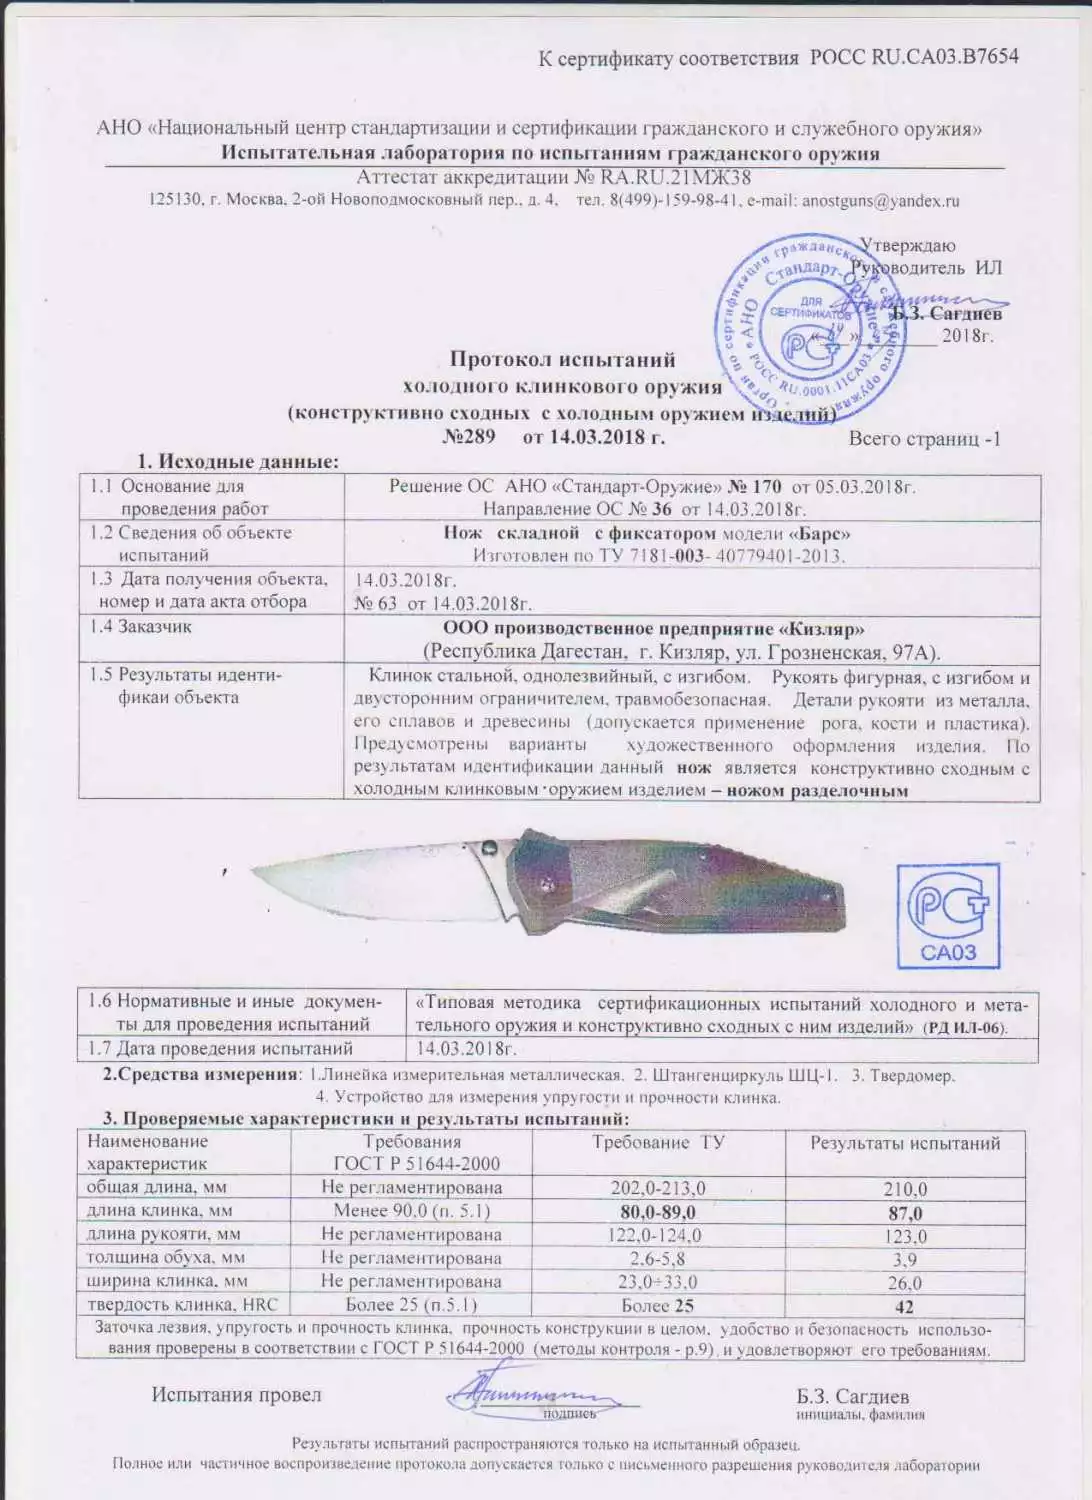 Нож ПП Кизляр Барс AUS-8 рукоять ABS пластик складной